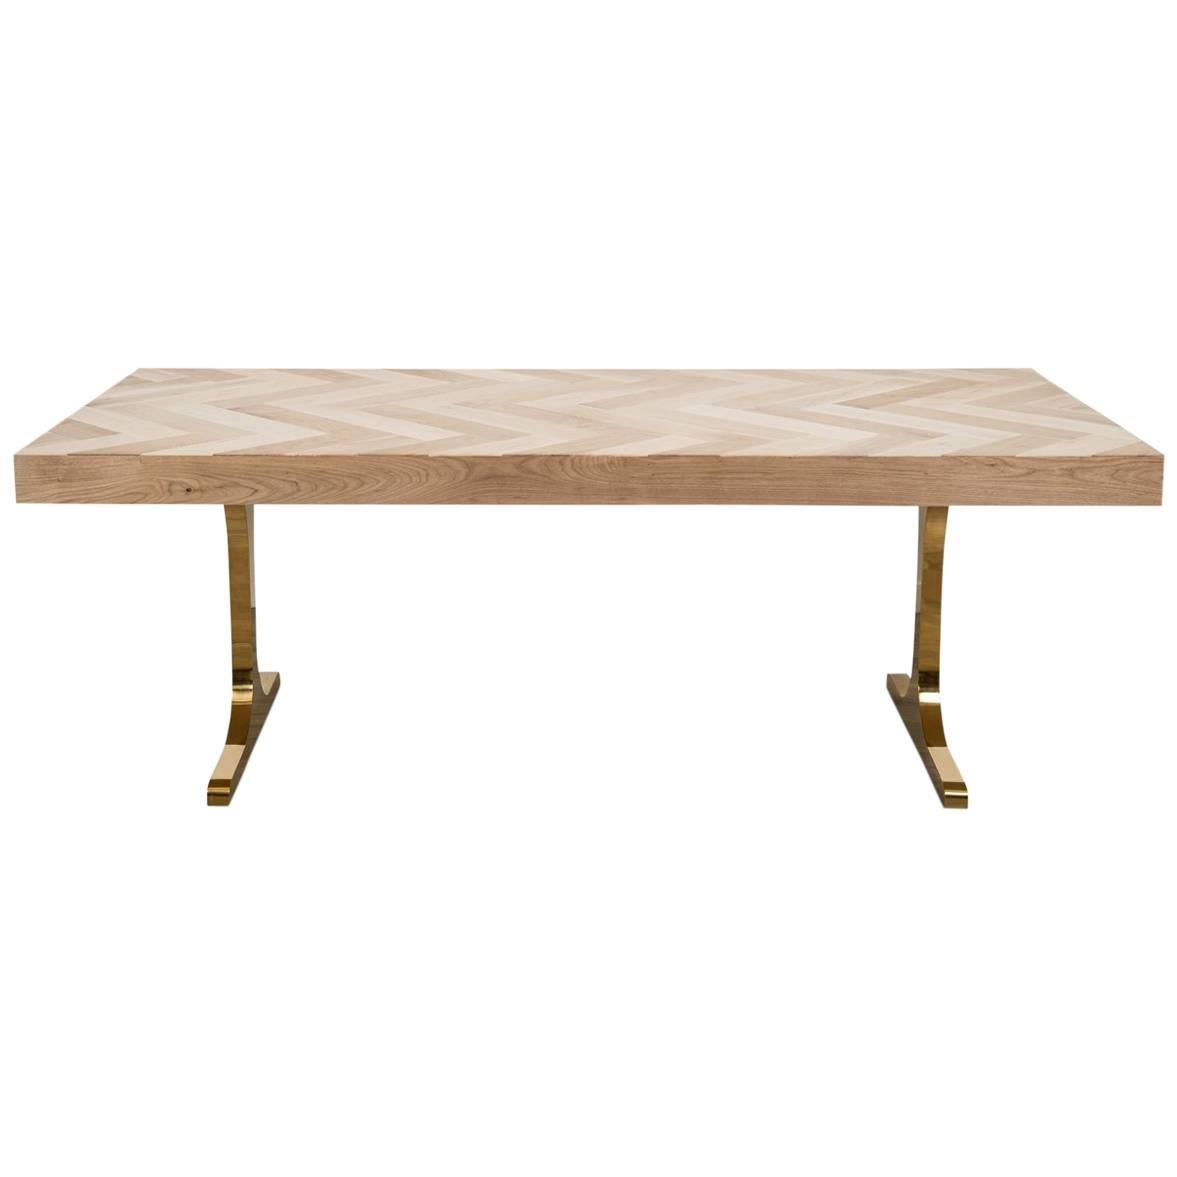 Modern Wood Dining Table with Bleached Walnut Herringbone Pattern & Brass T-Legs